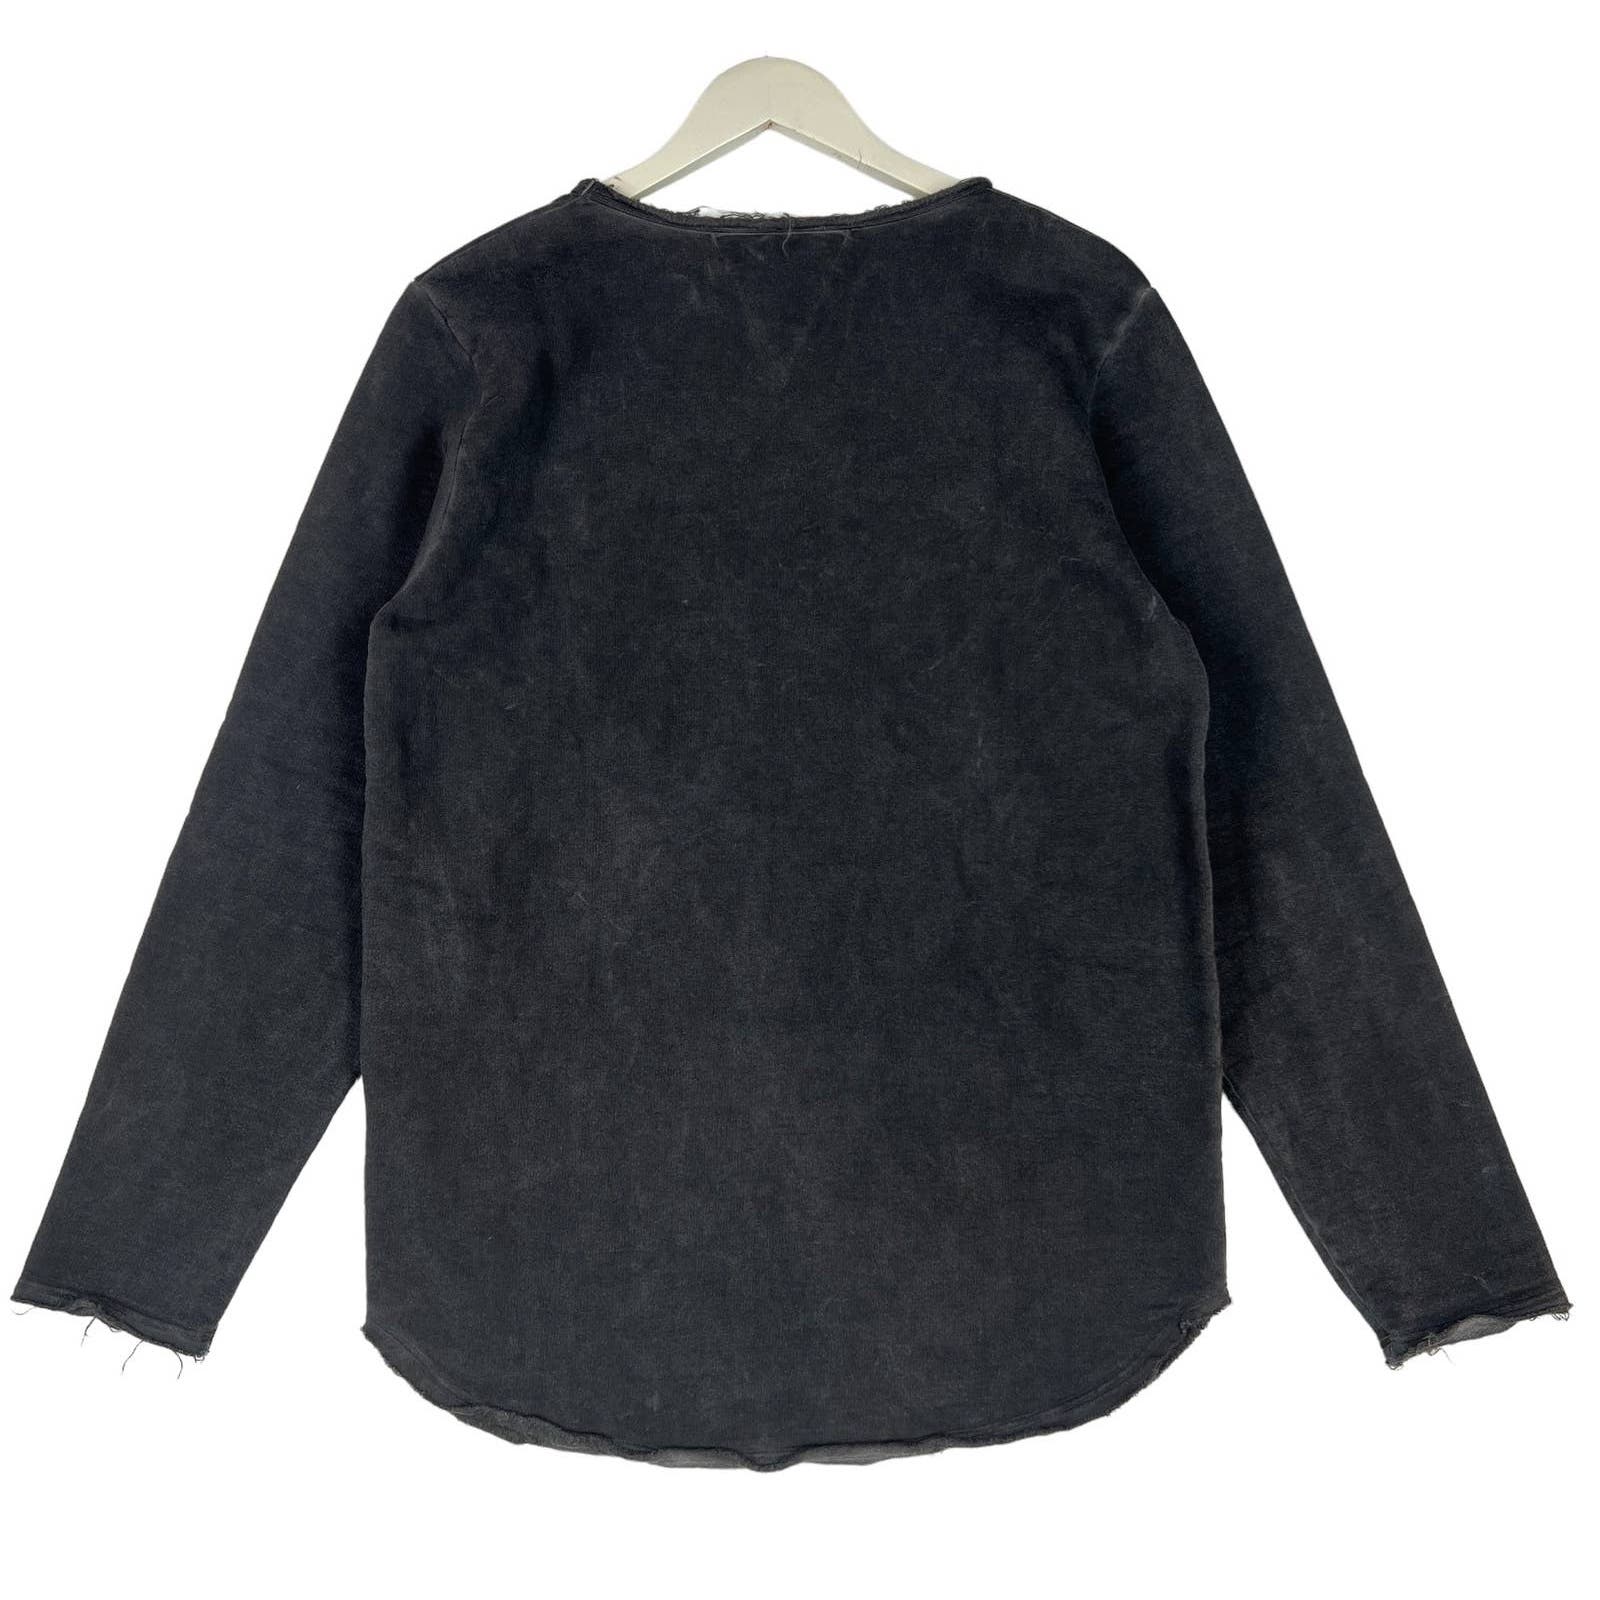 Mods London Men Dark Grey Sweatshirt US L Long Sleeve